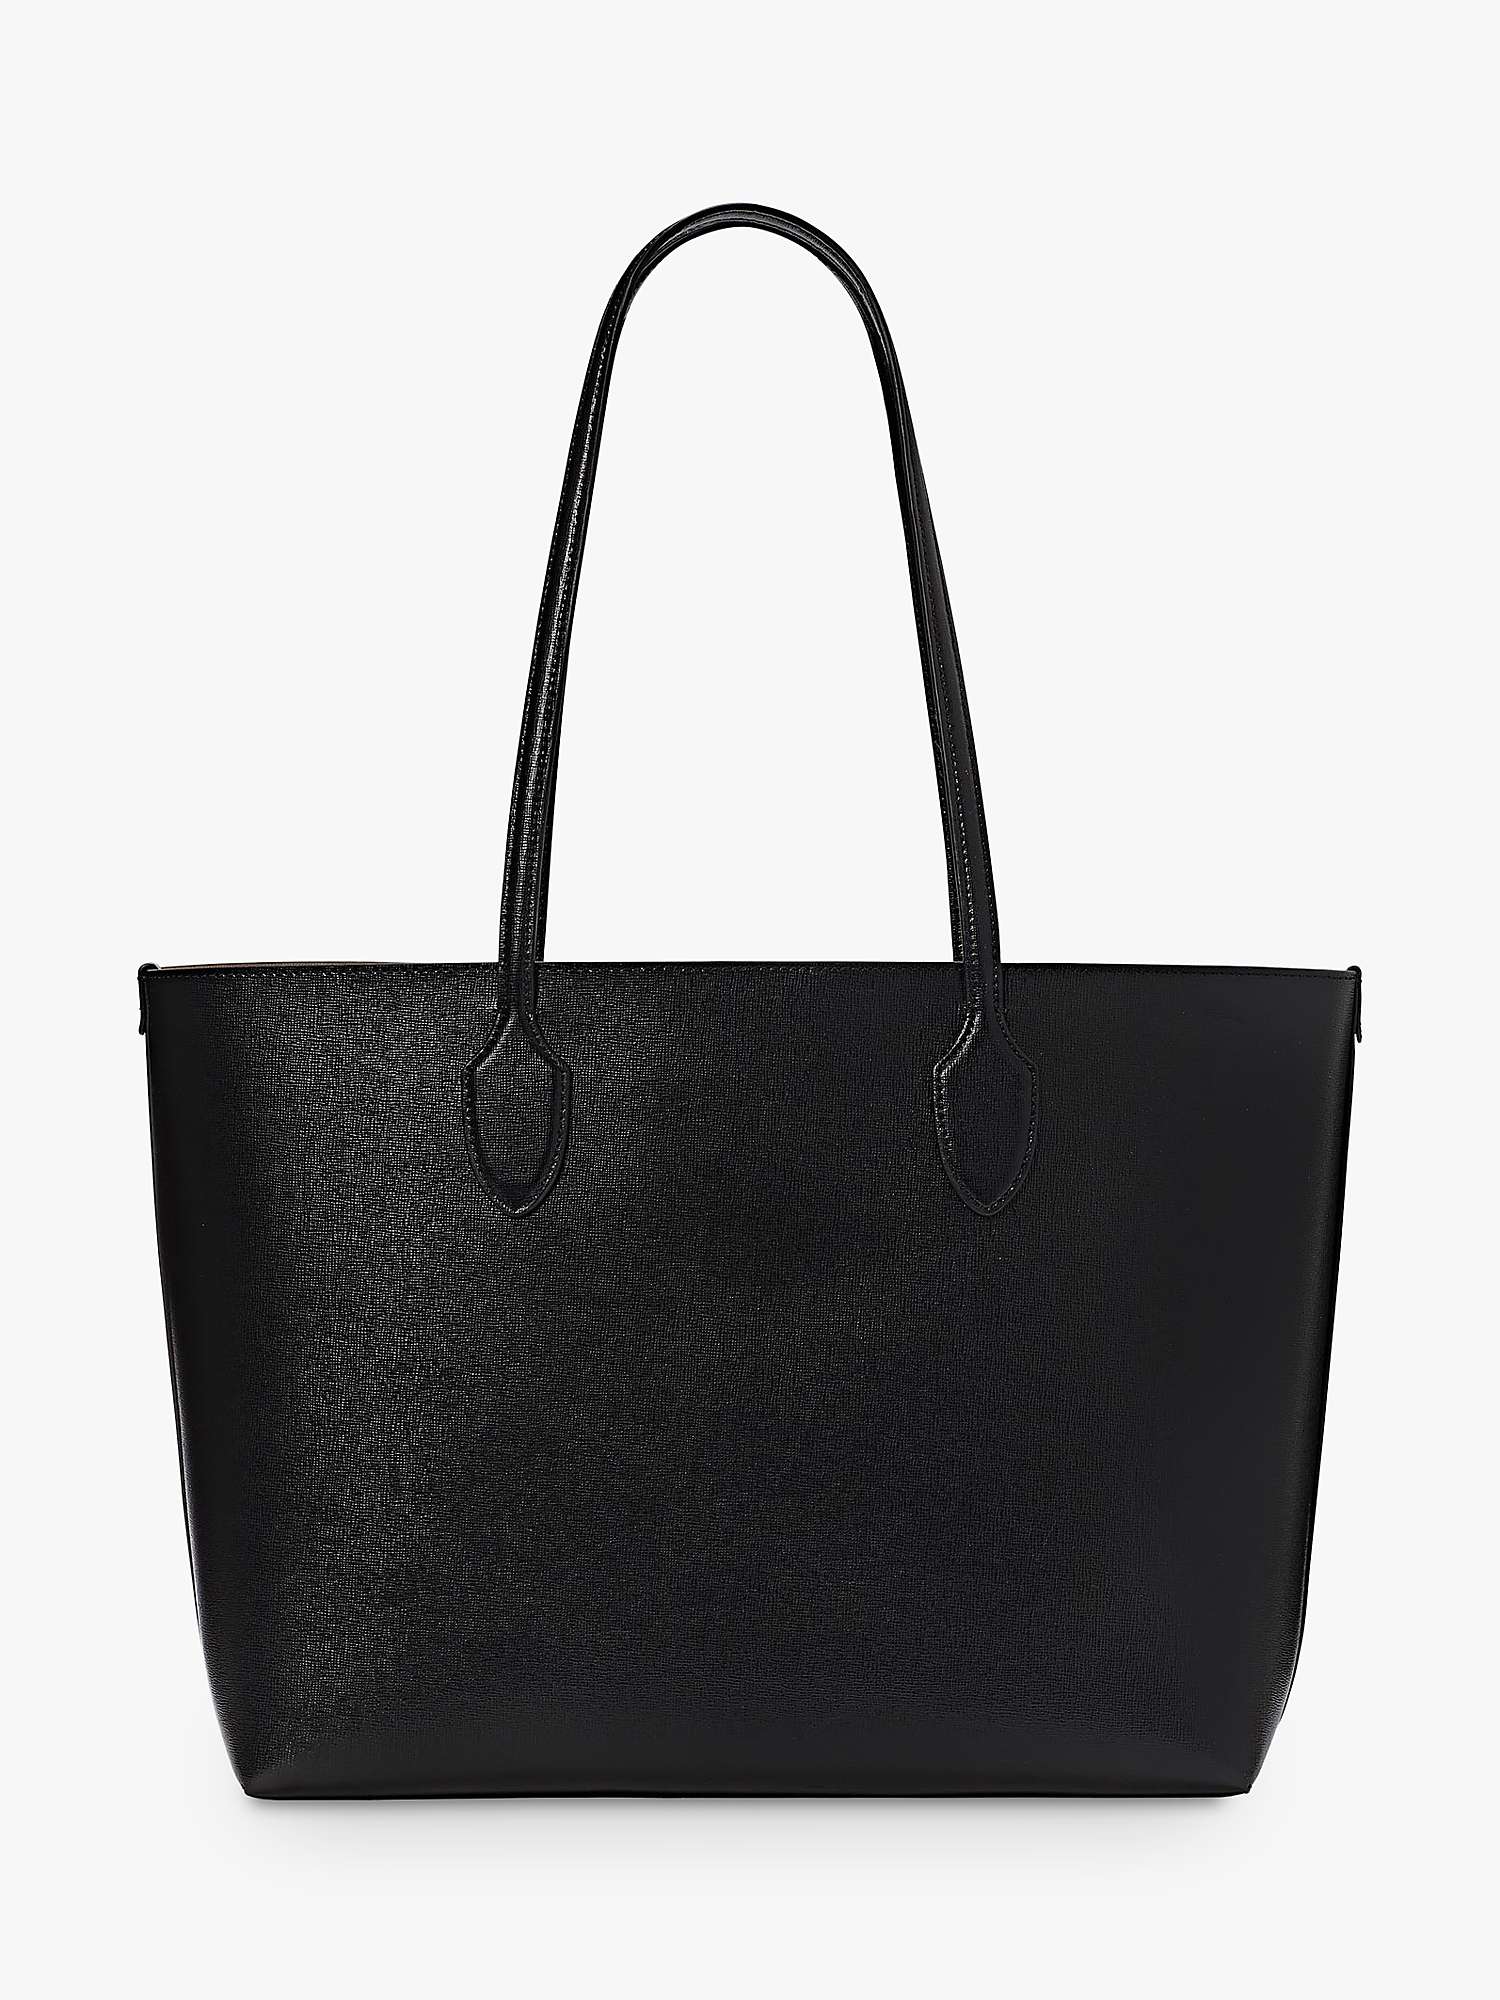 Buy kate spade new york Bleeker Leather Tote Bag Online at johnlewis.com